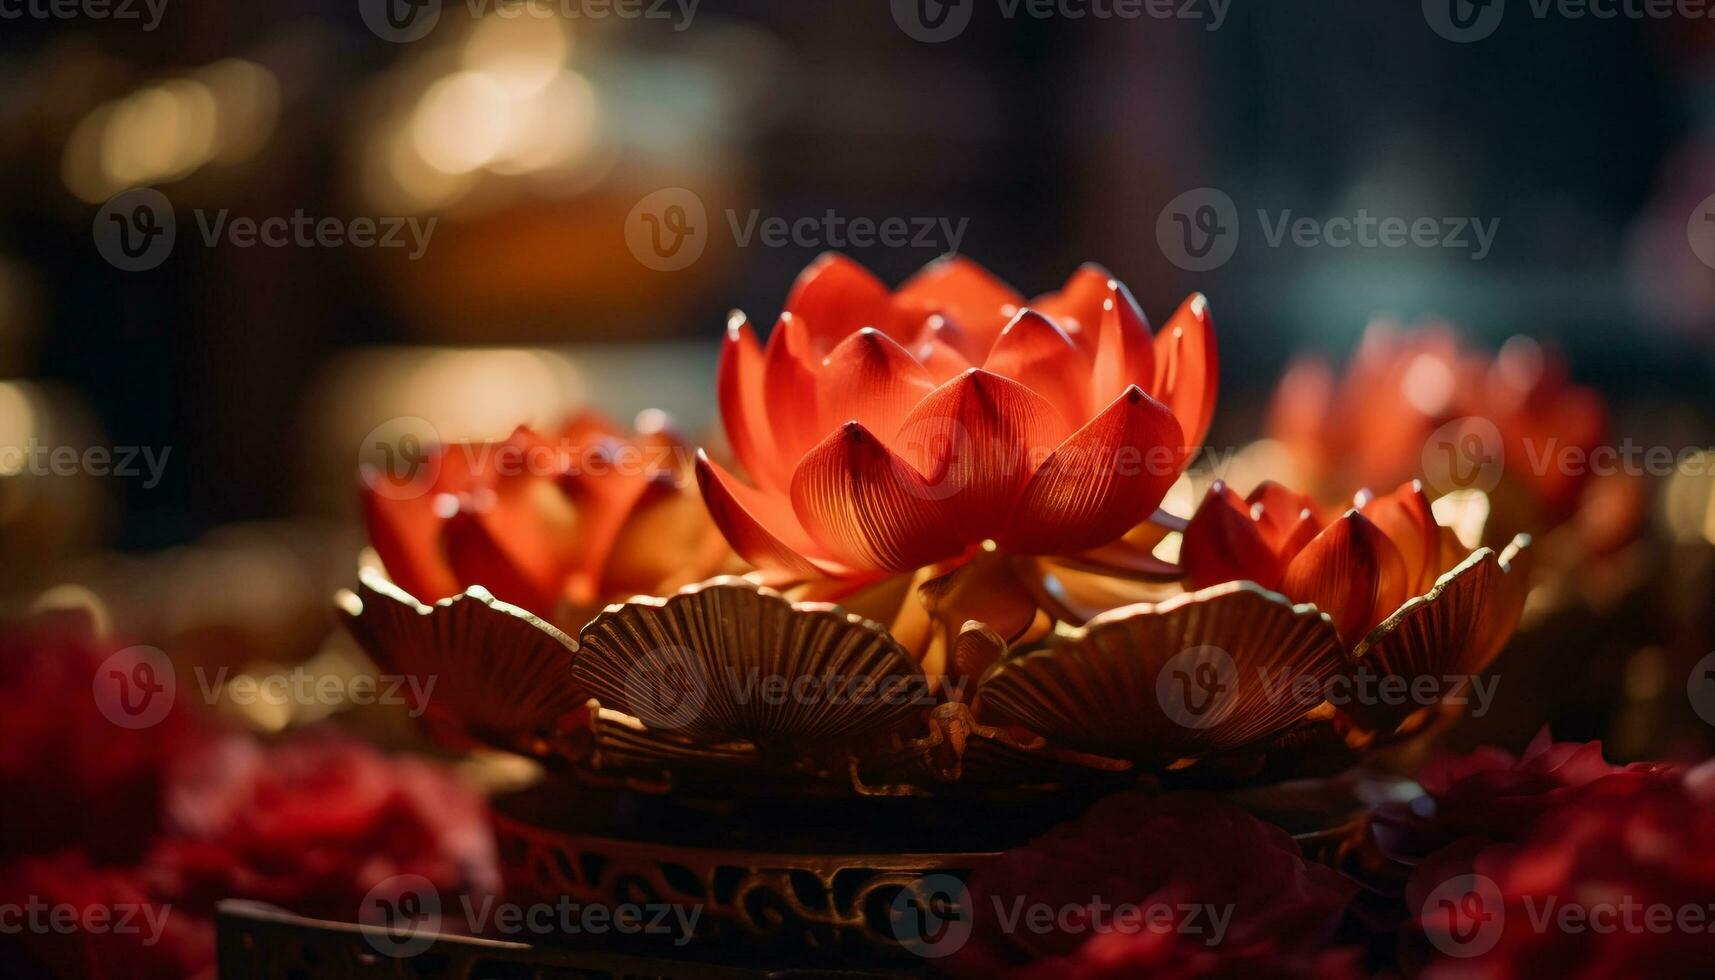 lotus water lelie, symbool van spiritualiteit, in rustig vijver gegenereerd door ai foto